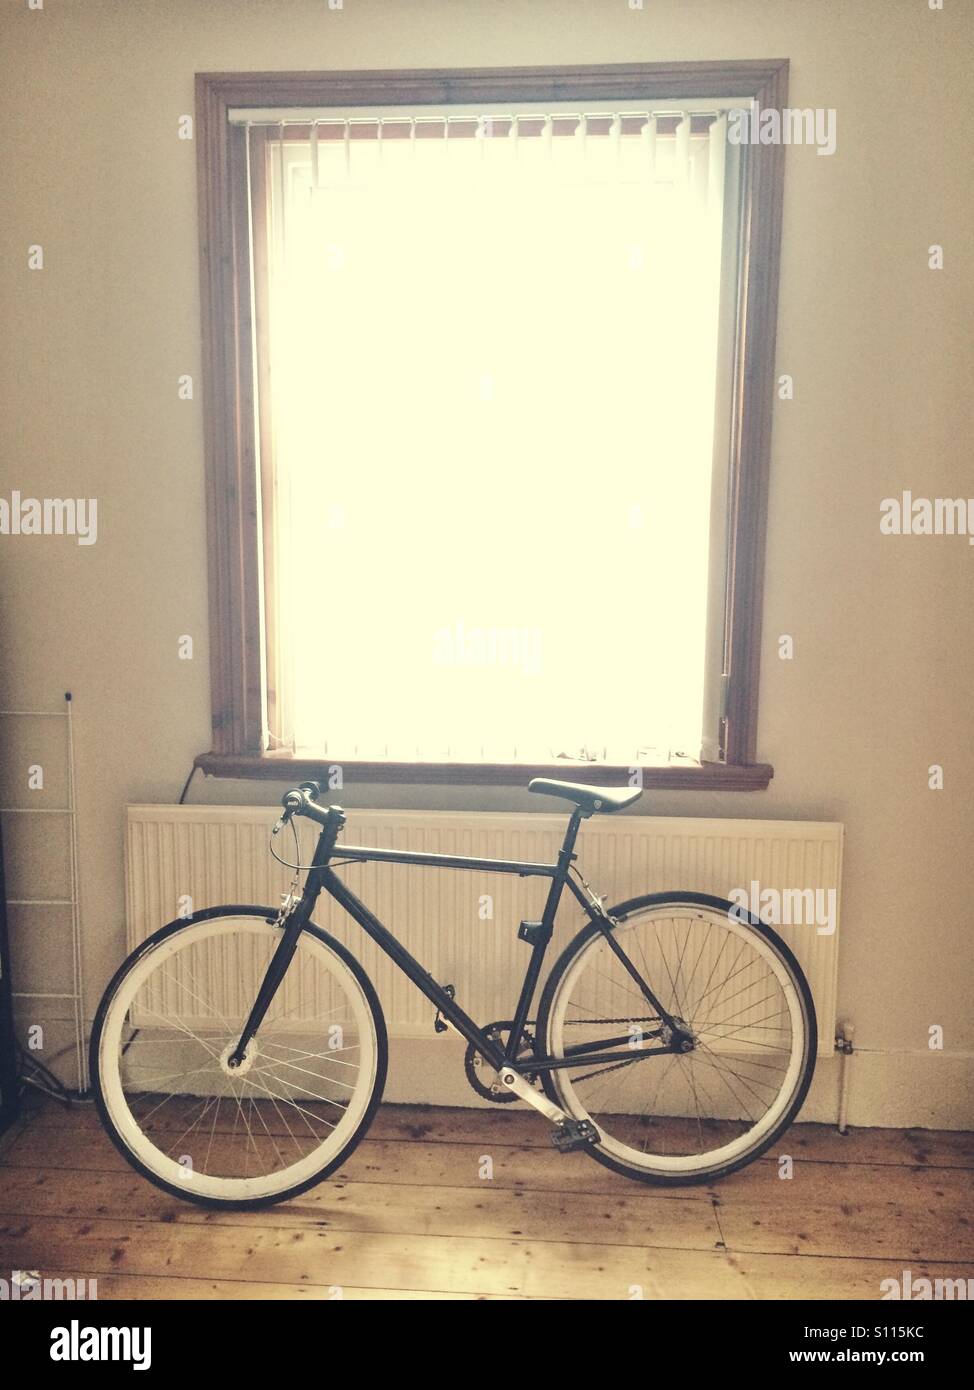 Fixie bike inside an urban home Stock Photo